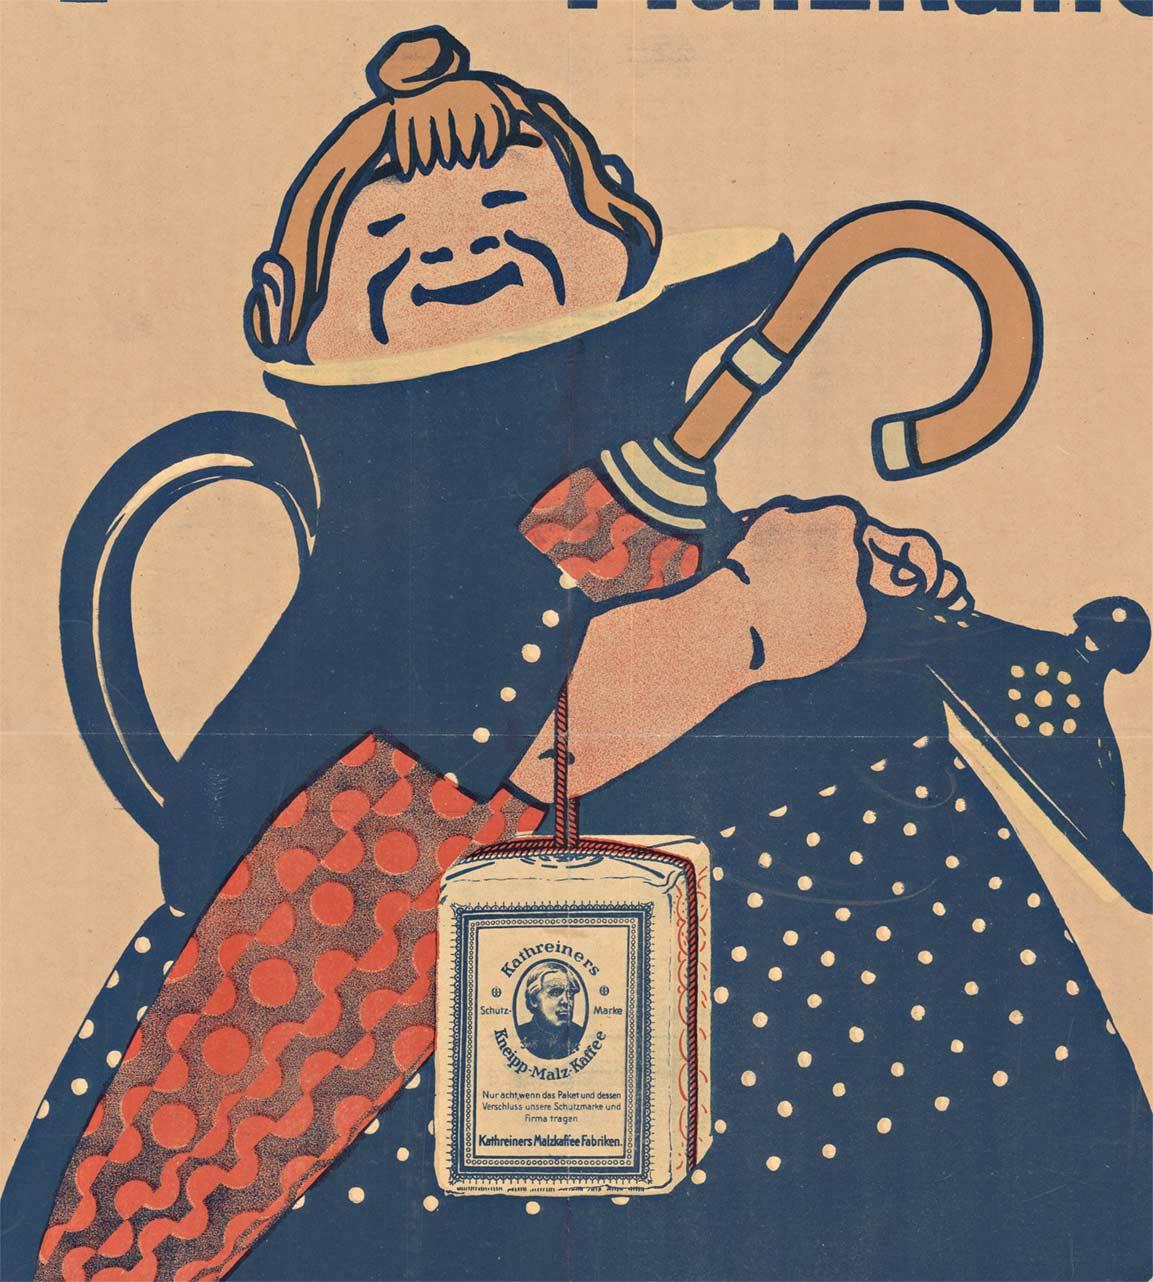 Original Kathreiners Malzkaffee vintage coffee poster - Print by Unknown